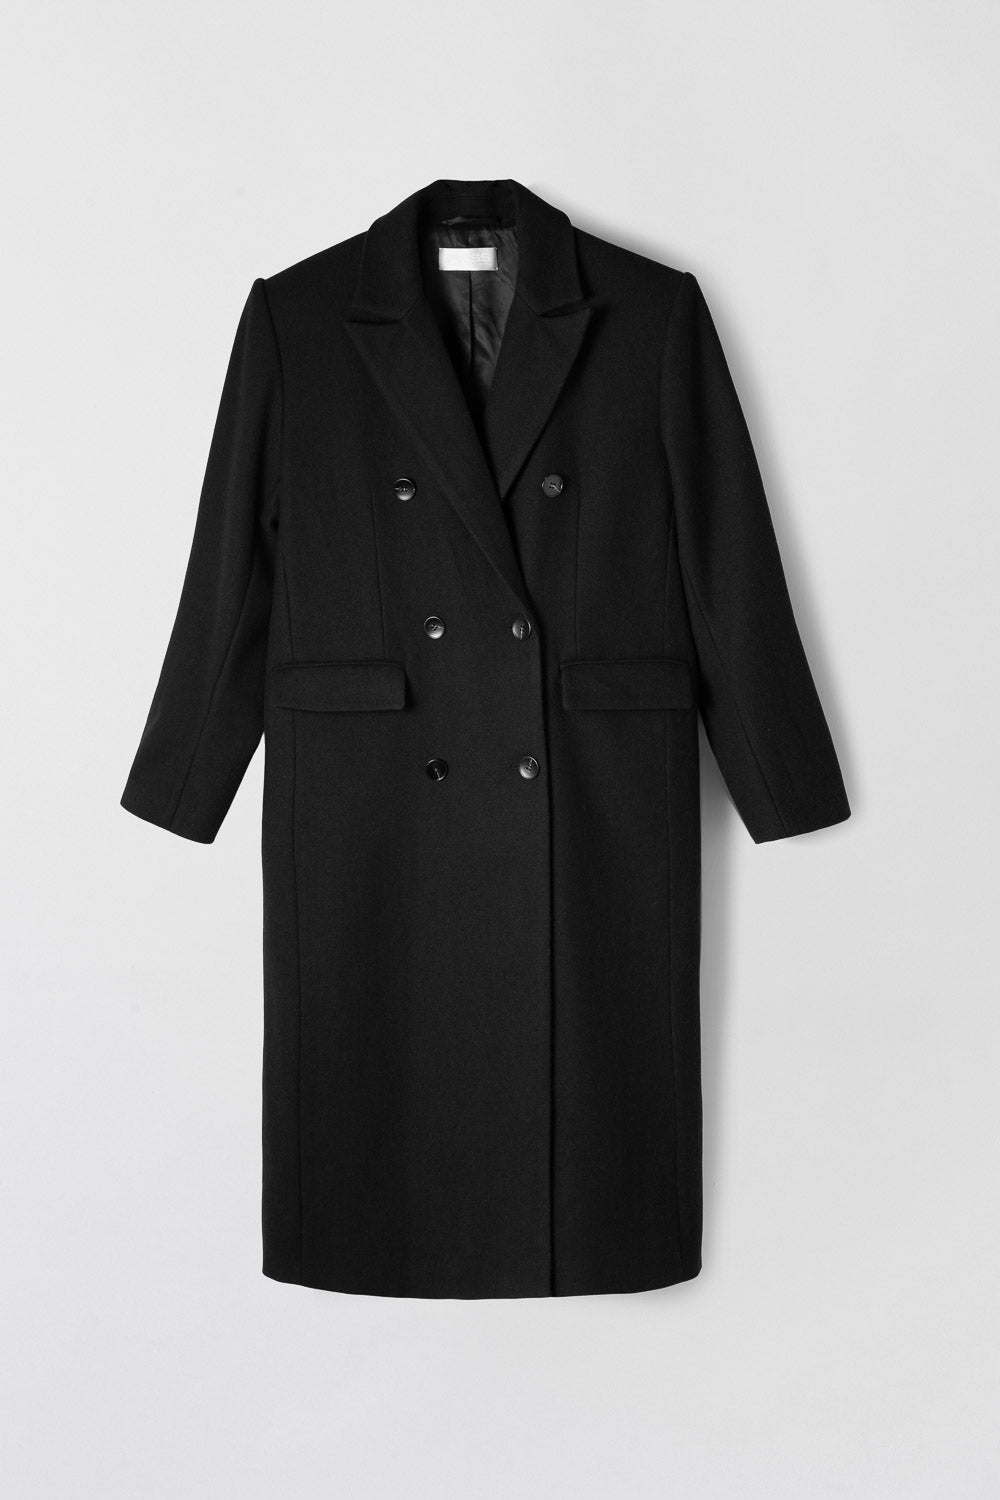 Florence-overcoat-FWSS-black-coat